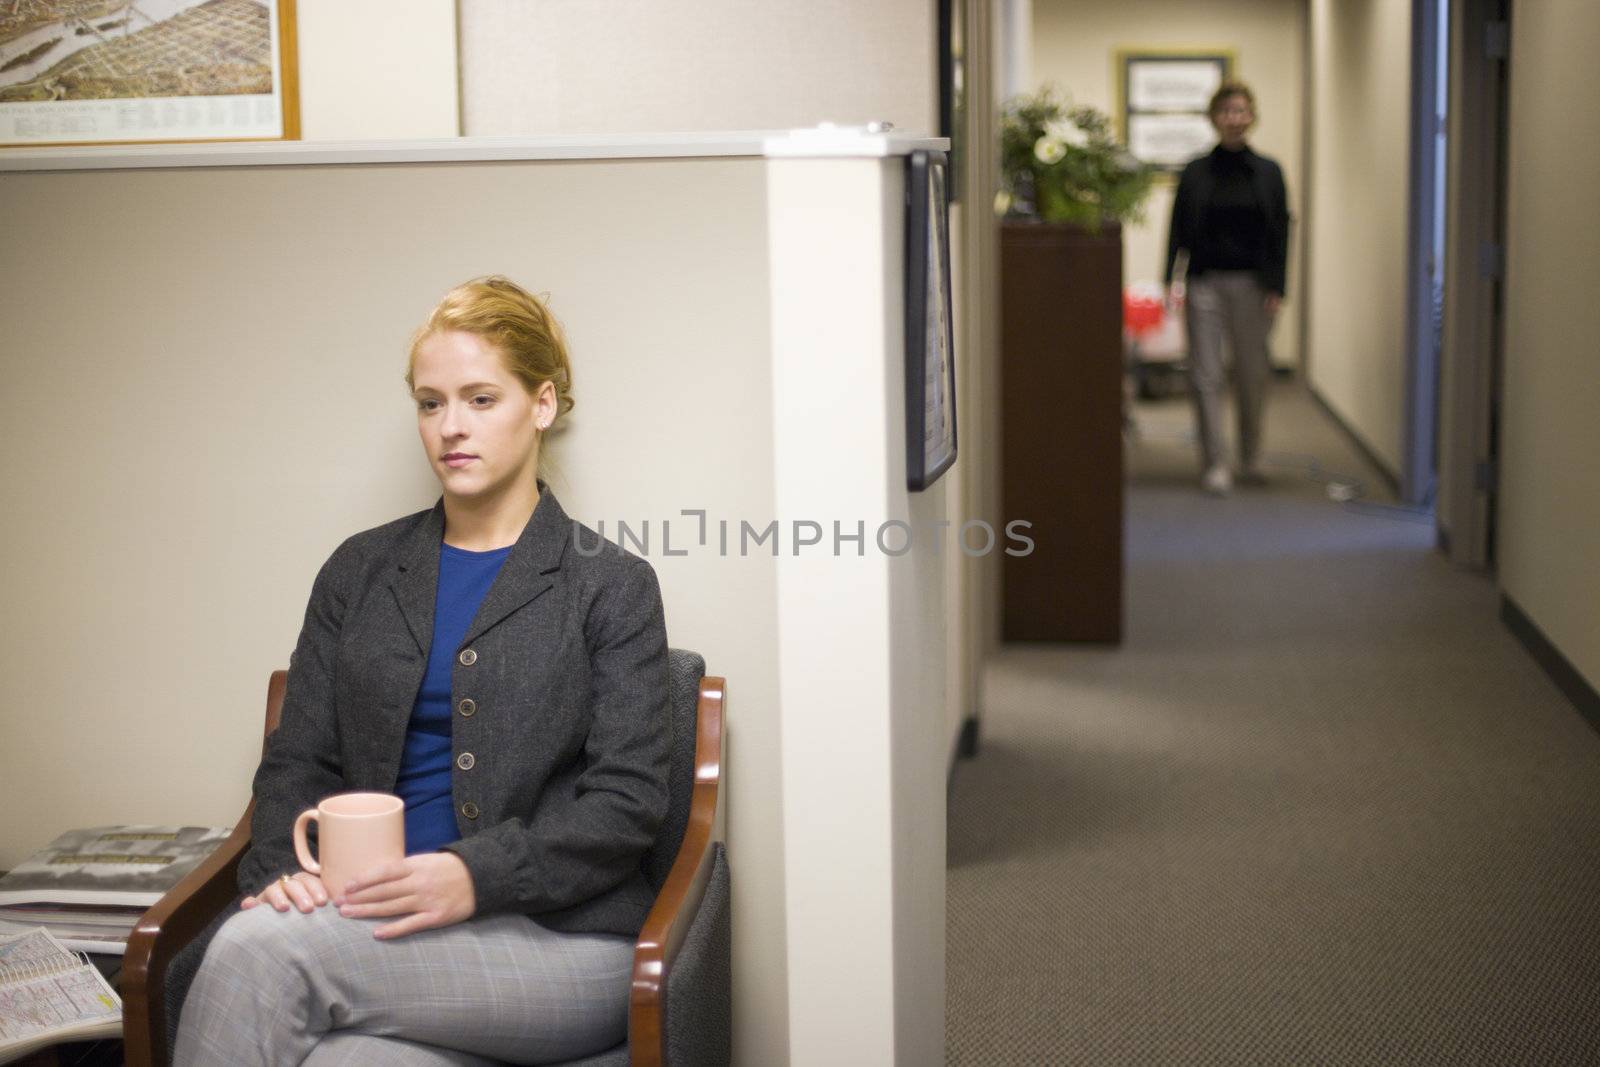 Businesswoman waiting in office lobby
Businesswoman waiting in o by edbockstock